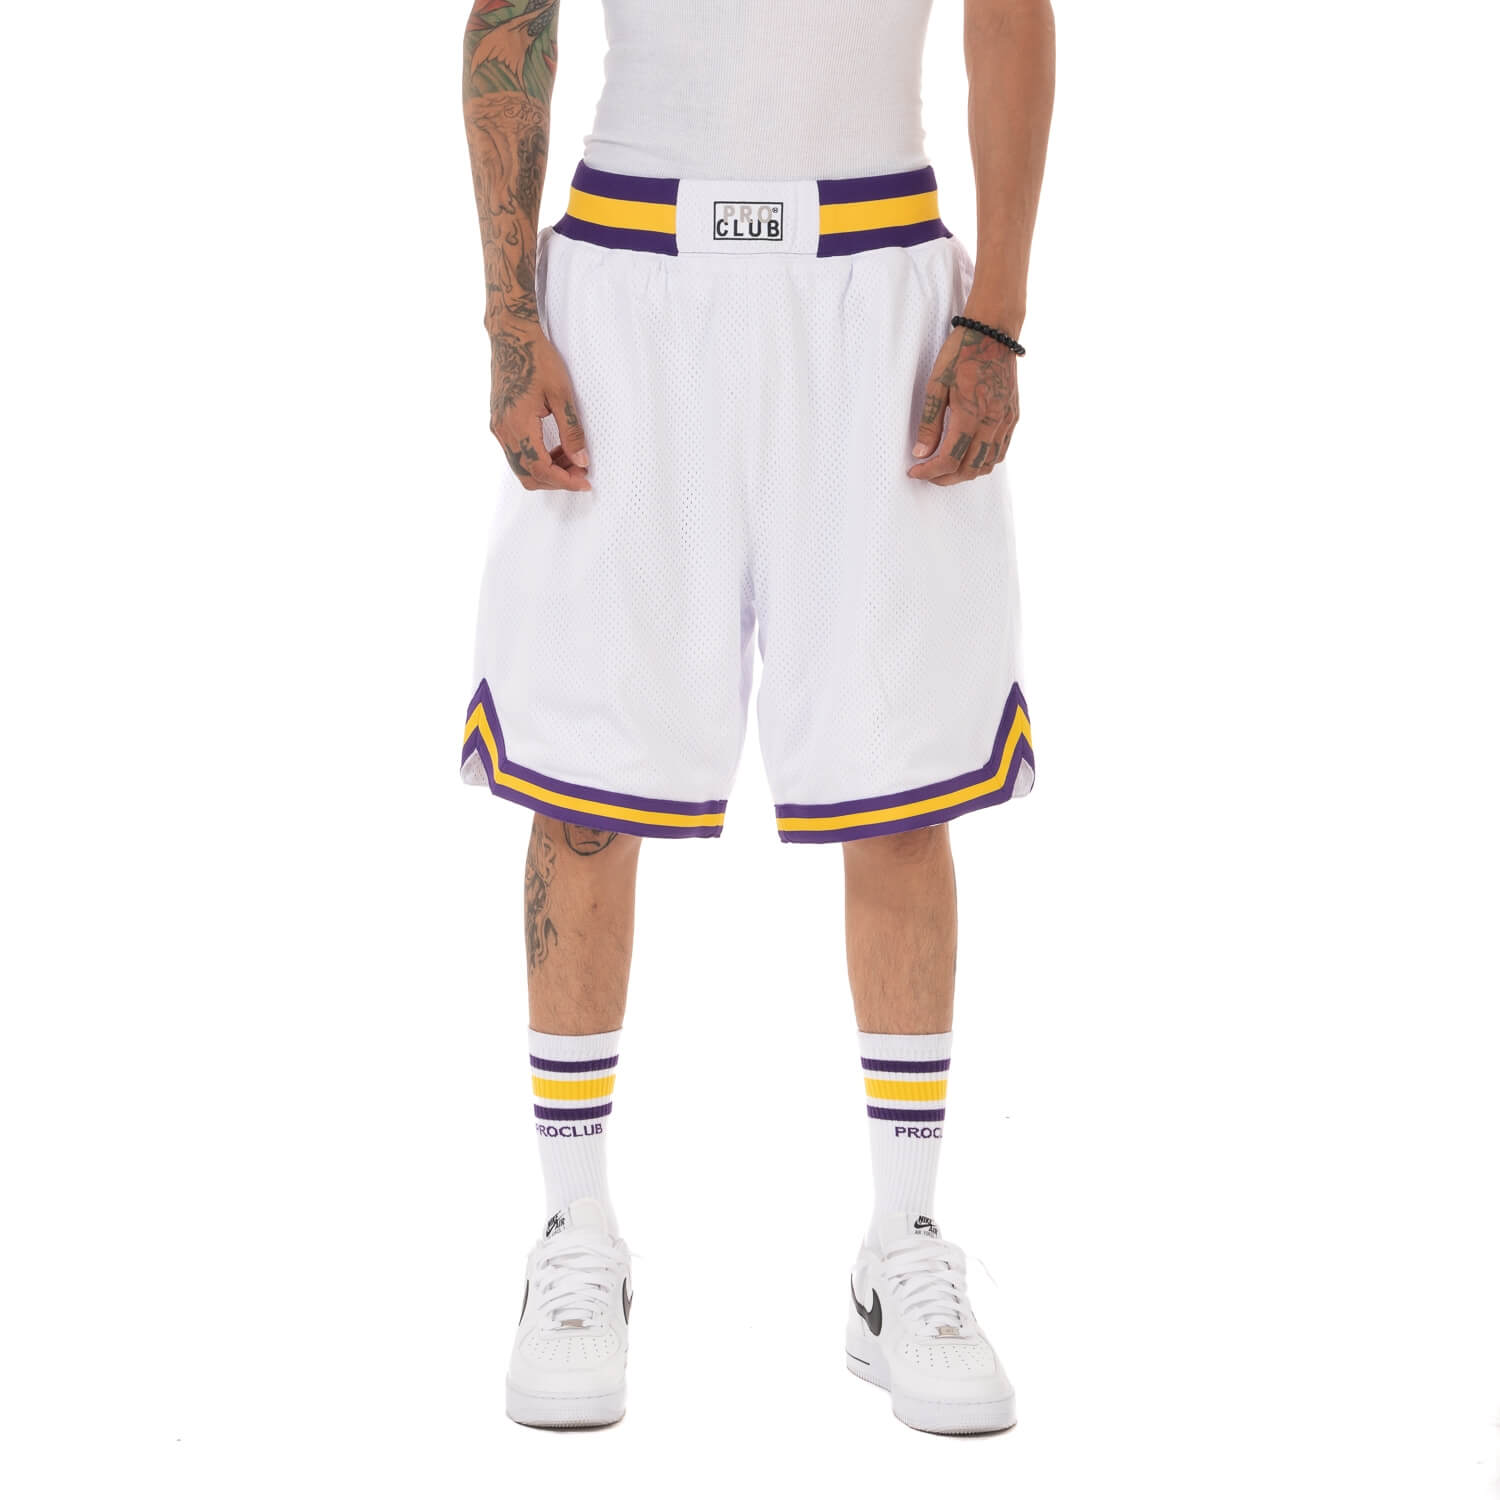 Pro Club Classic Basketball Shorts - White/Purple